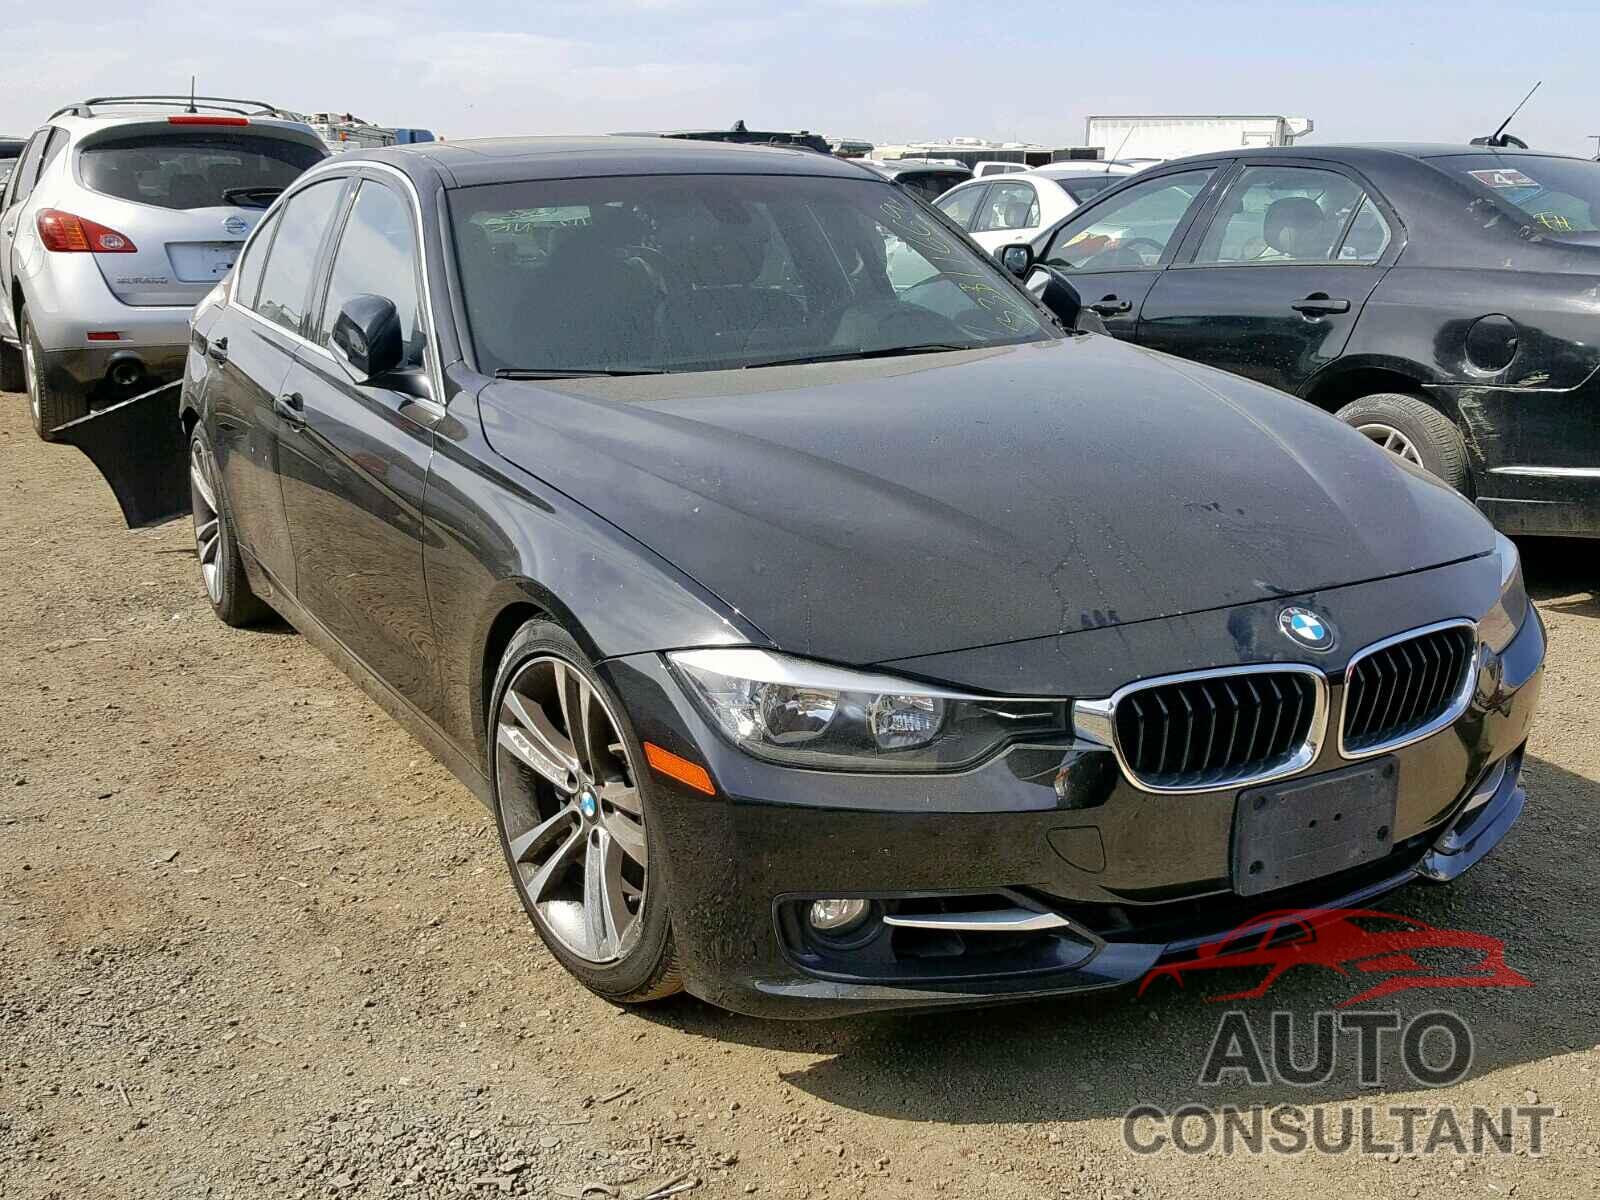 BMW 3 SERIES 2015 - WBA3C1C58FK118048